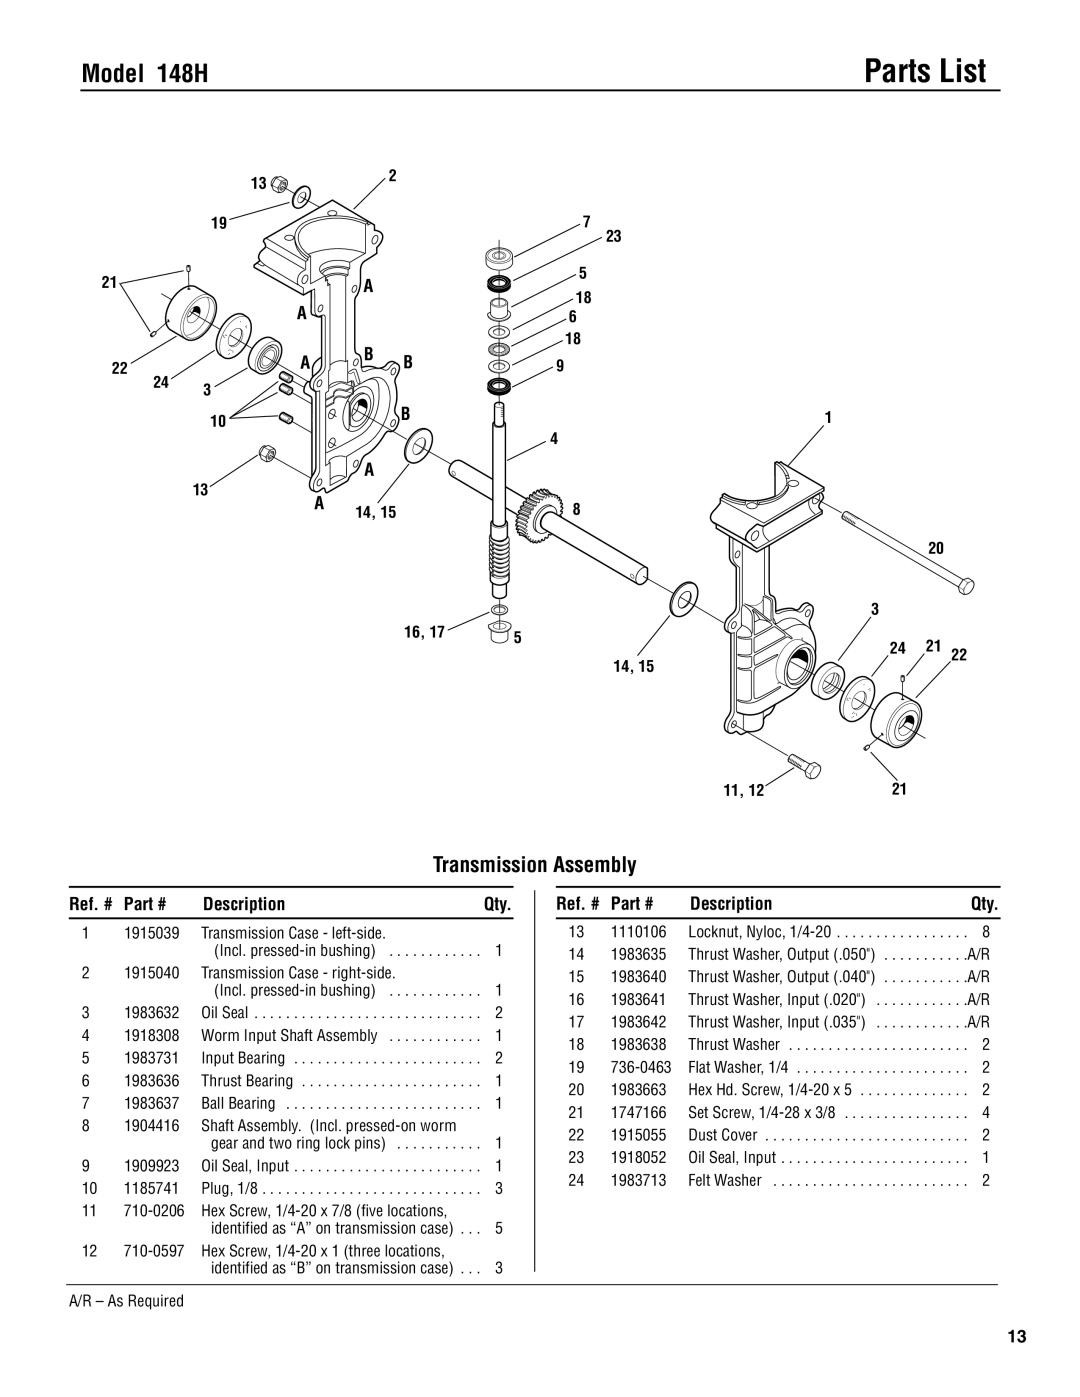 Troy-Bilt manual Parts List, Model 148H, Transmission Assembly, Ref. #, Description 